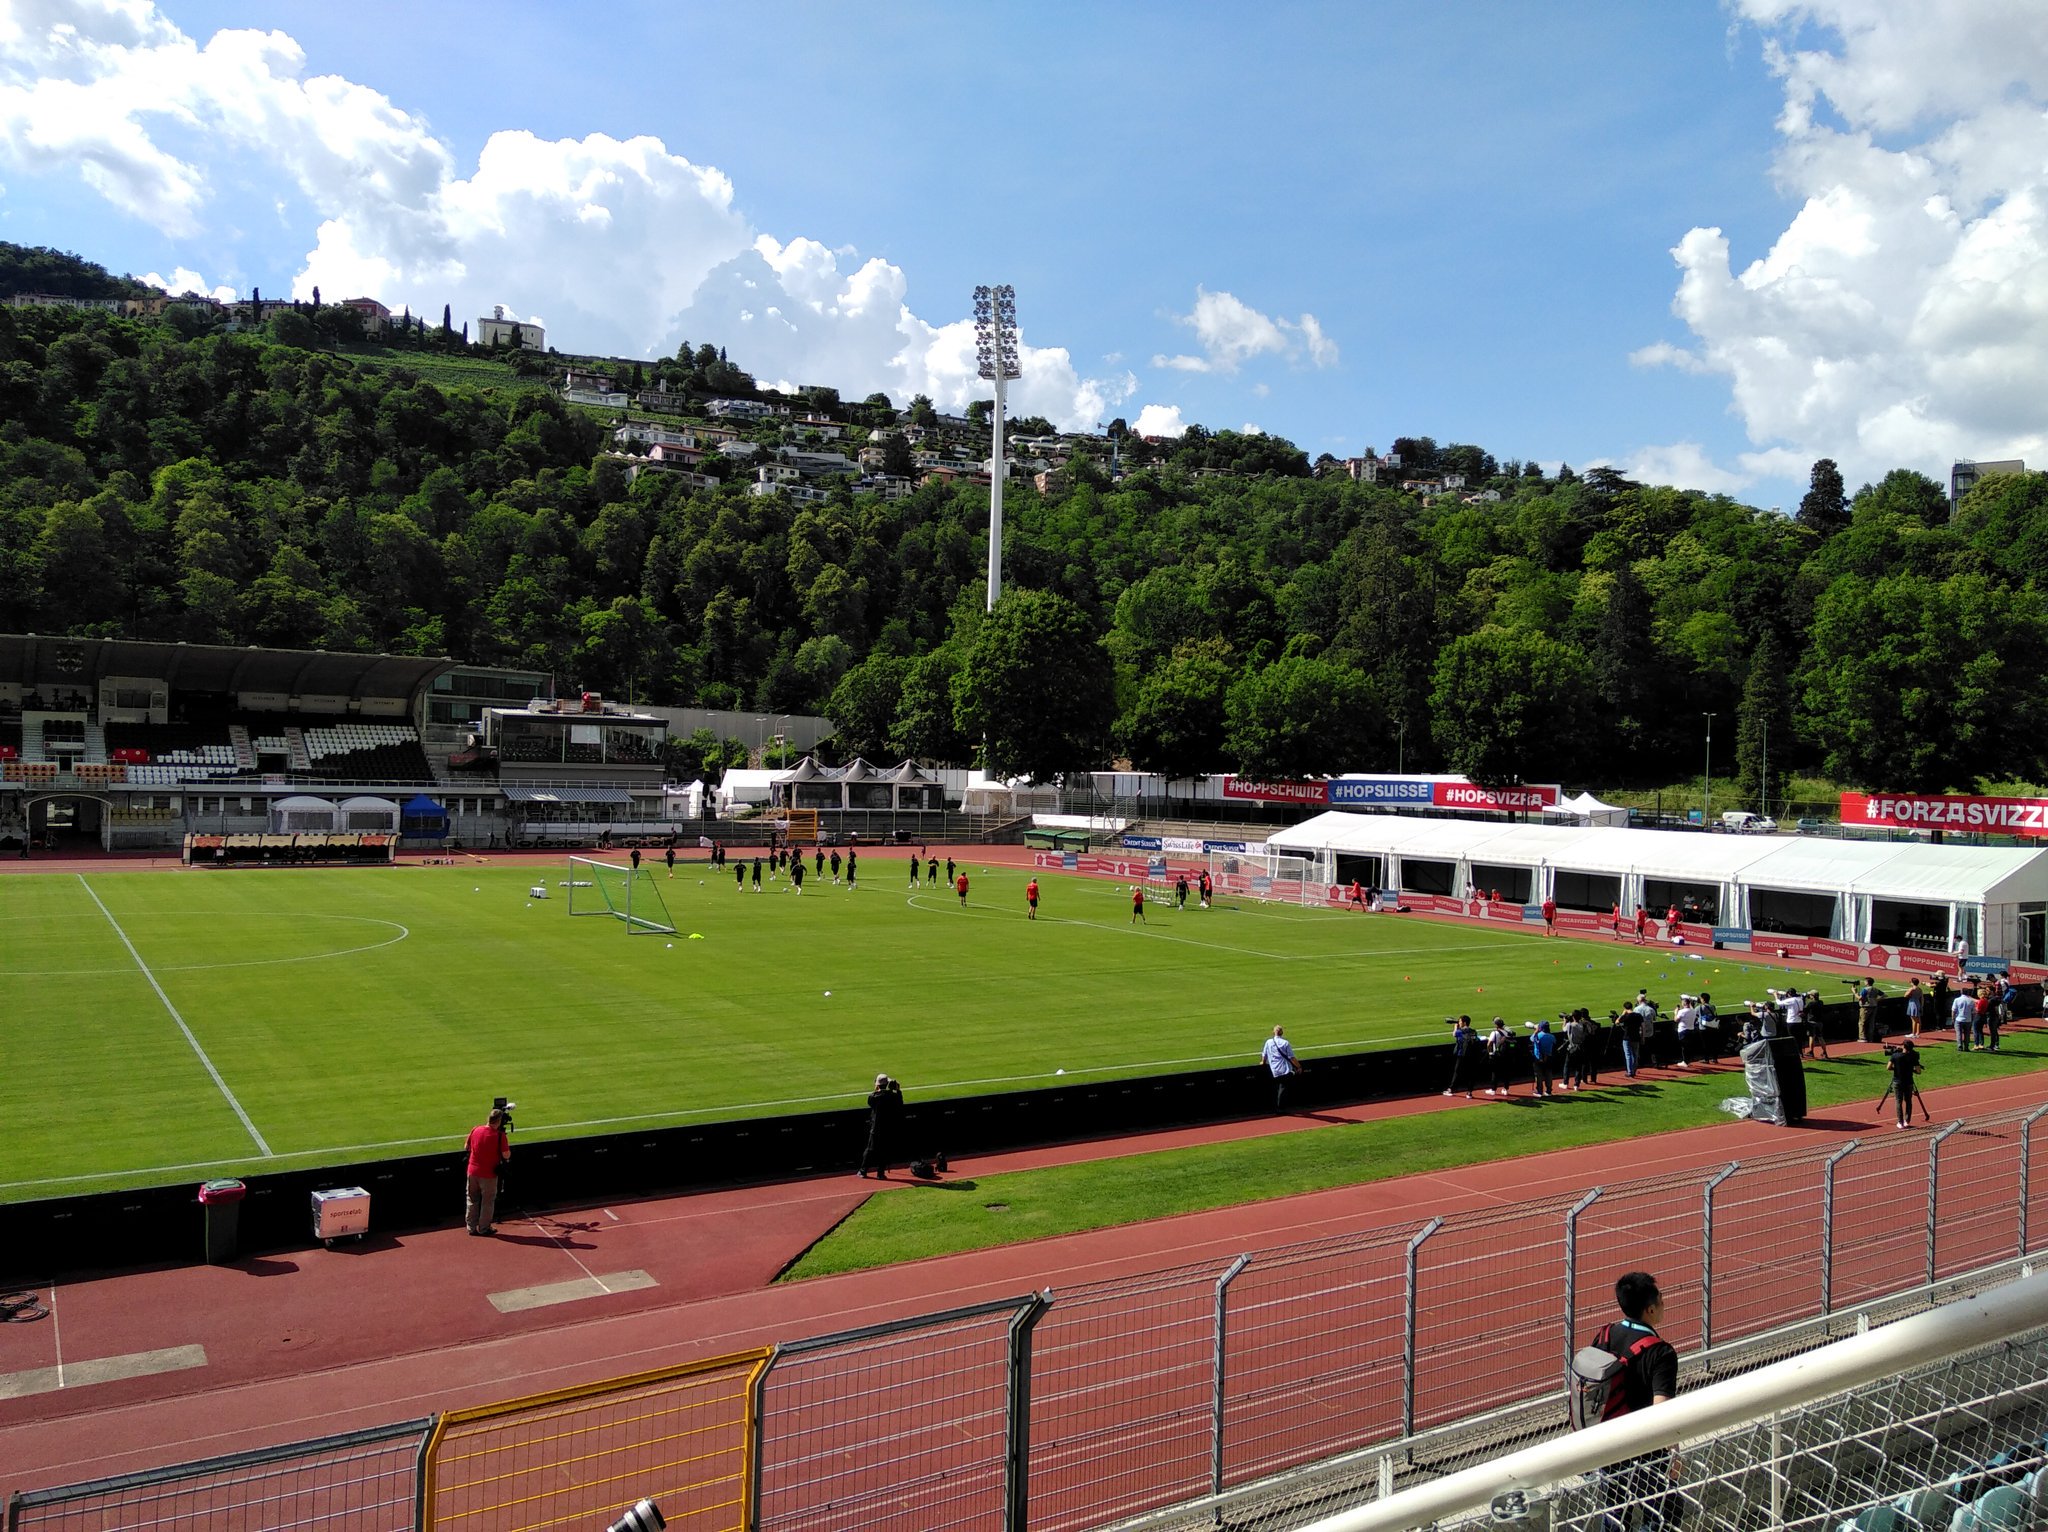 Legendsstadium スイス代表練習スタート 収容人数約6000のスタディオ コルナレド 打ちっぱなしコンクリートの立ち見席と古い座席 のどか ここで代表戦 最高 これから新しい多目的スタジアムが出来るようで そっちはスイススーパーリーグやuefaの